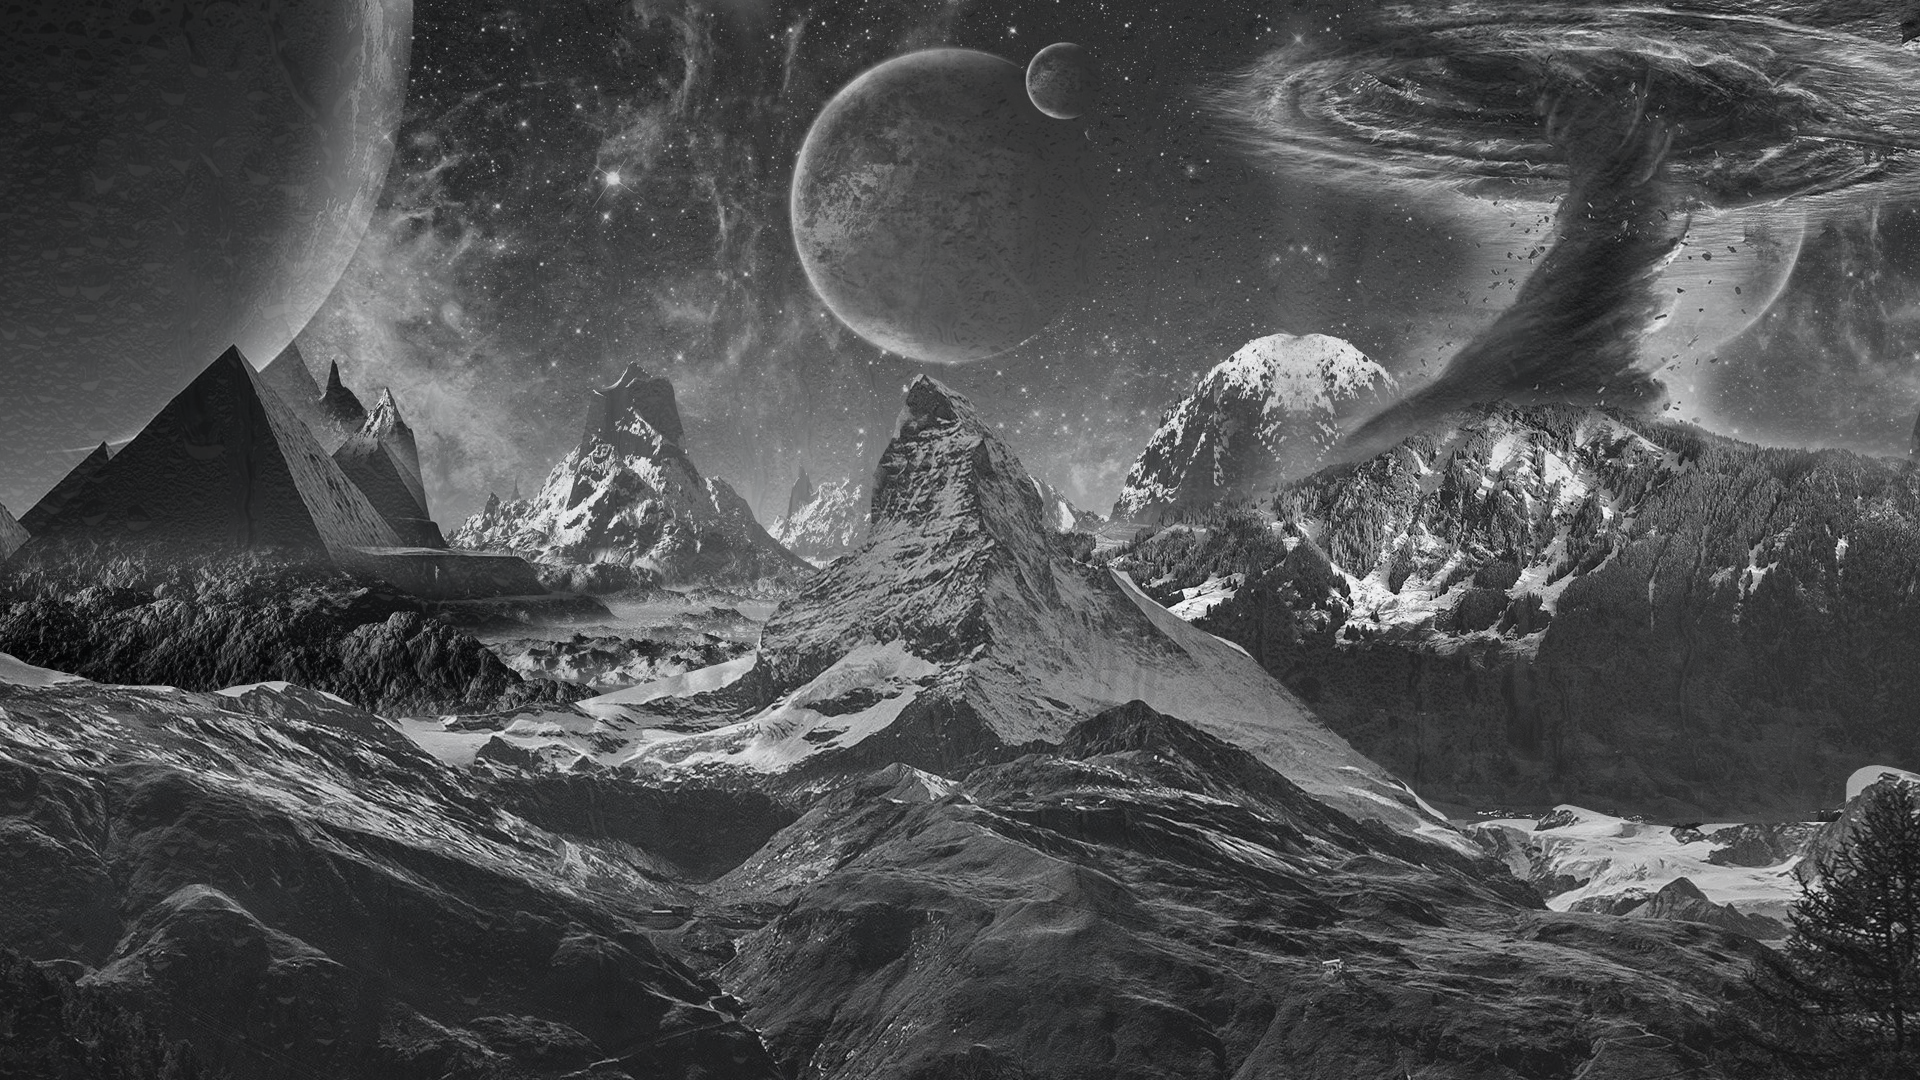 General 1920x1080 monochrome nature pyramid mountains digital art surreal Matterhorn landscape space art space